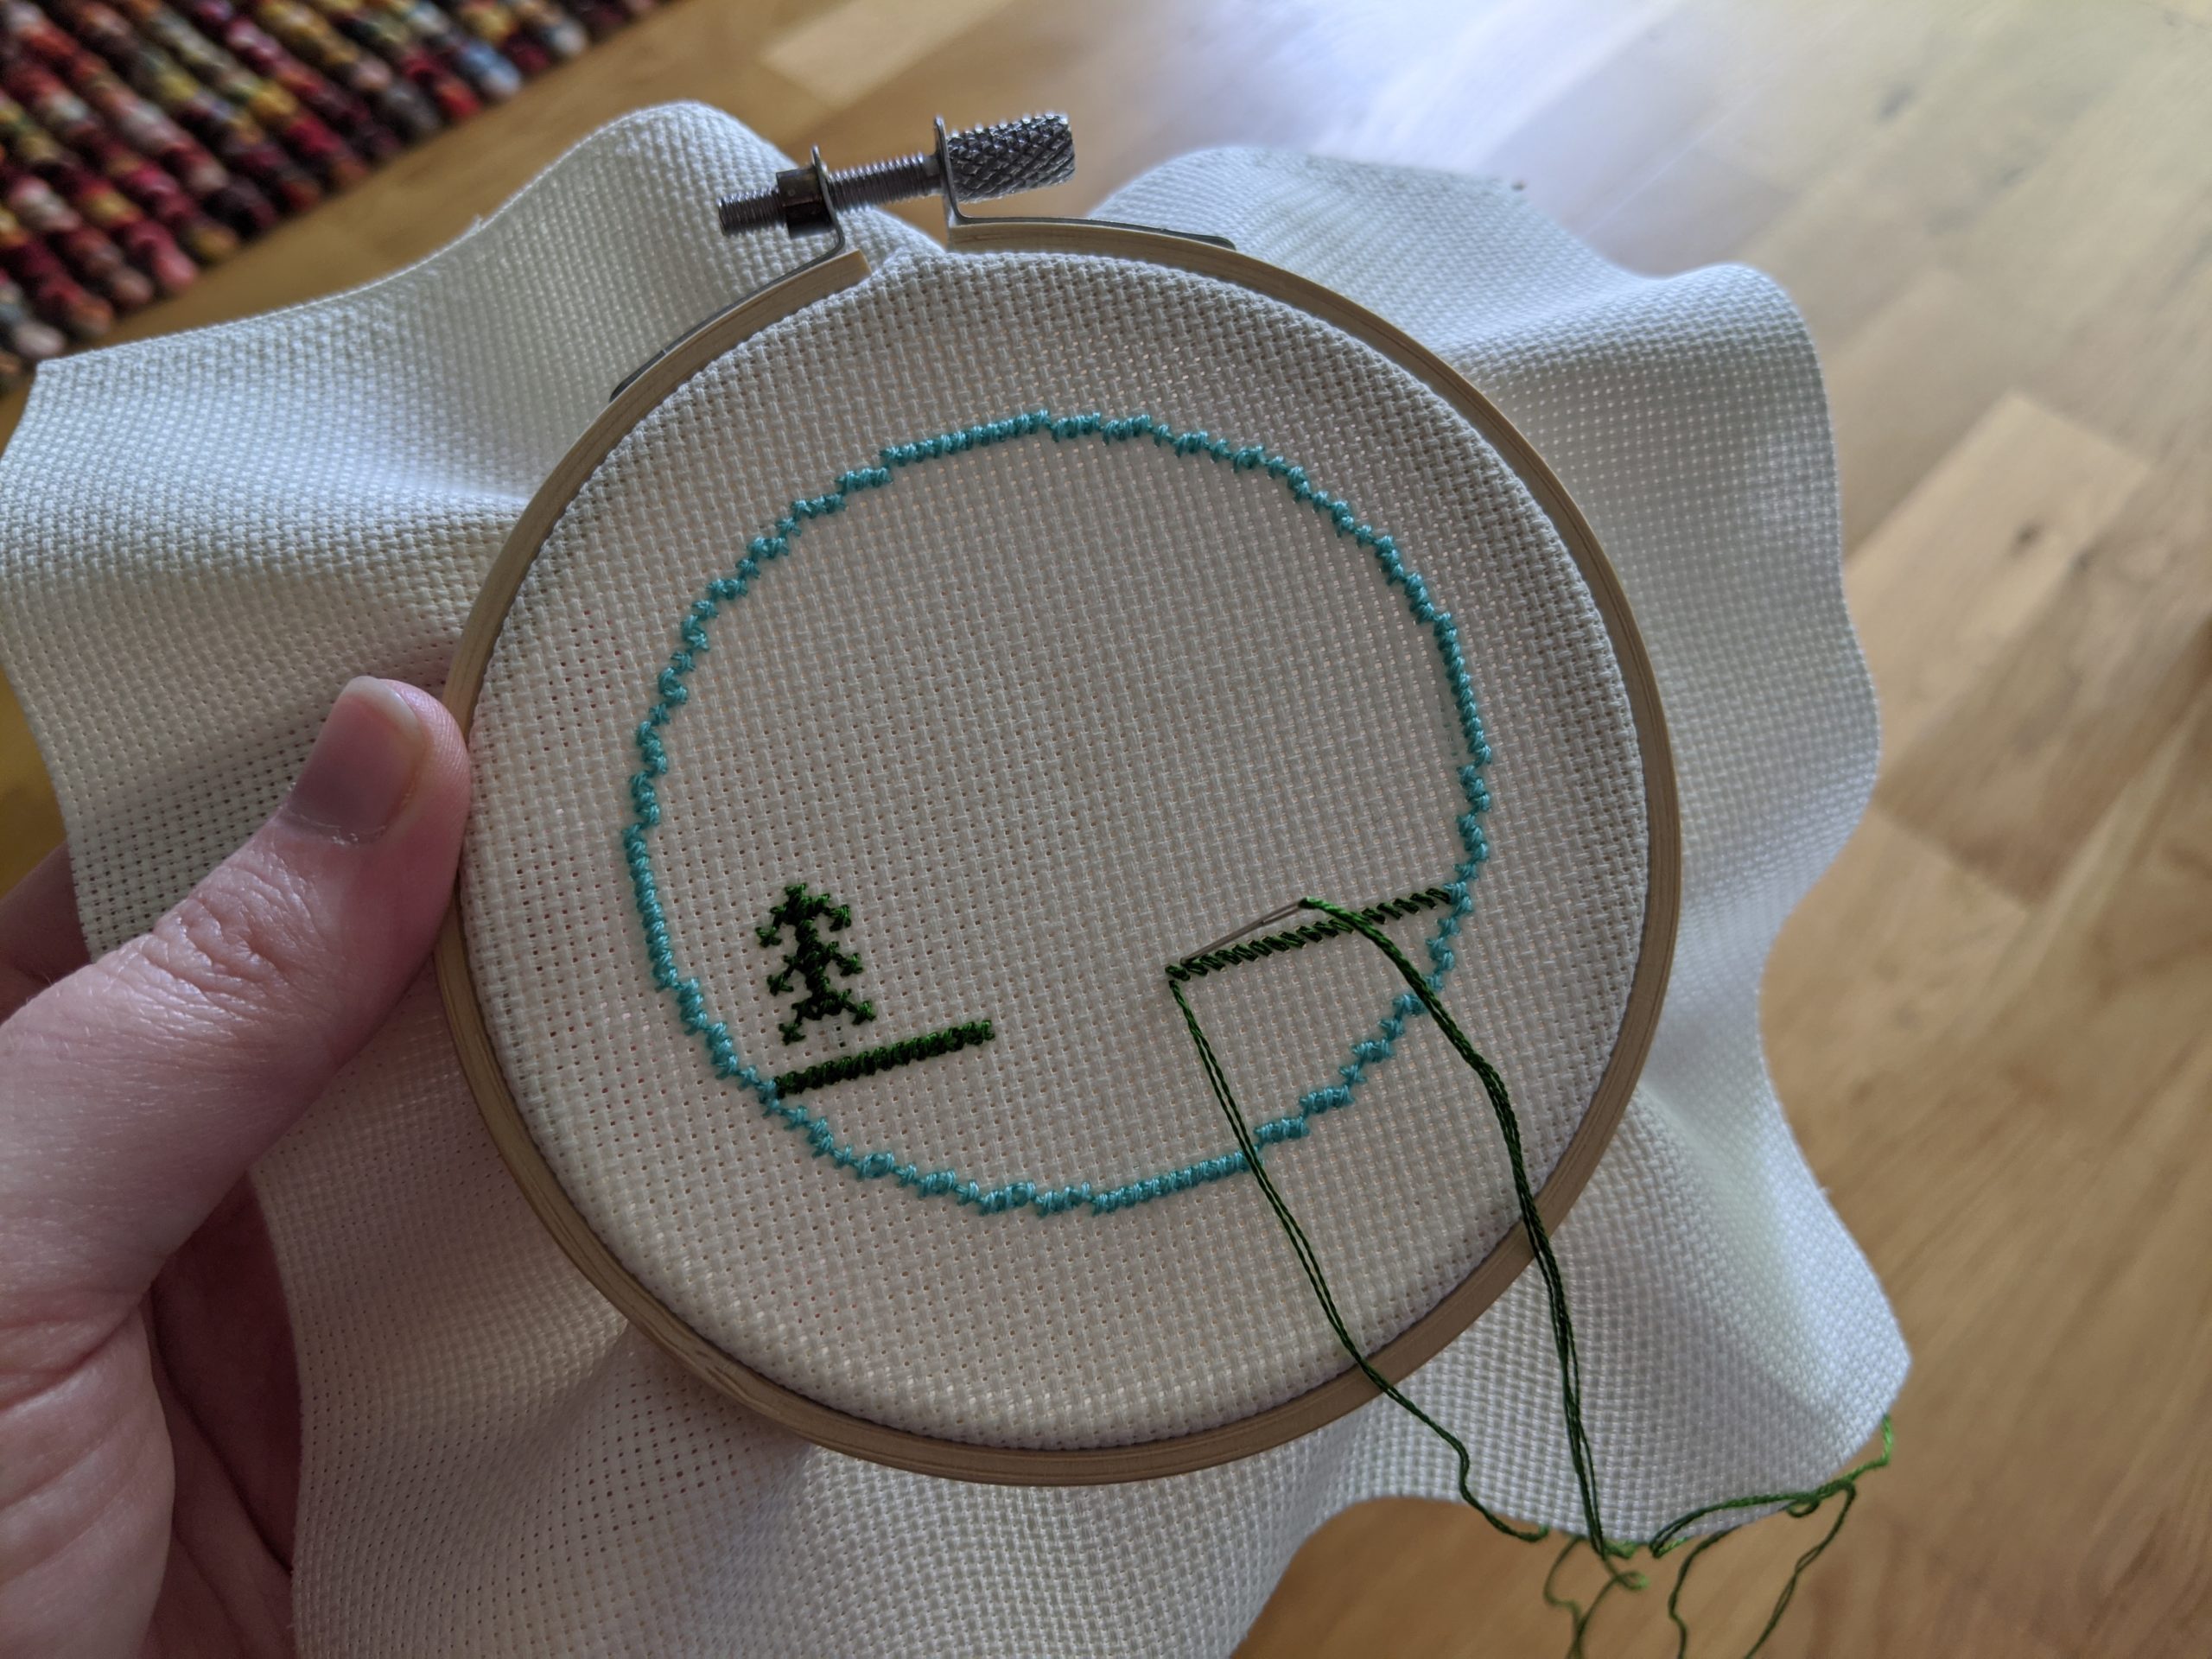 cross-stitch in progress